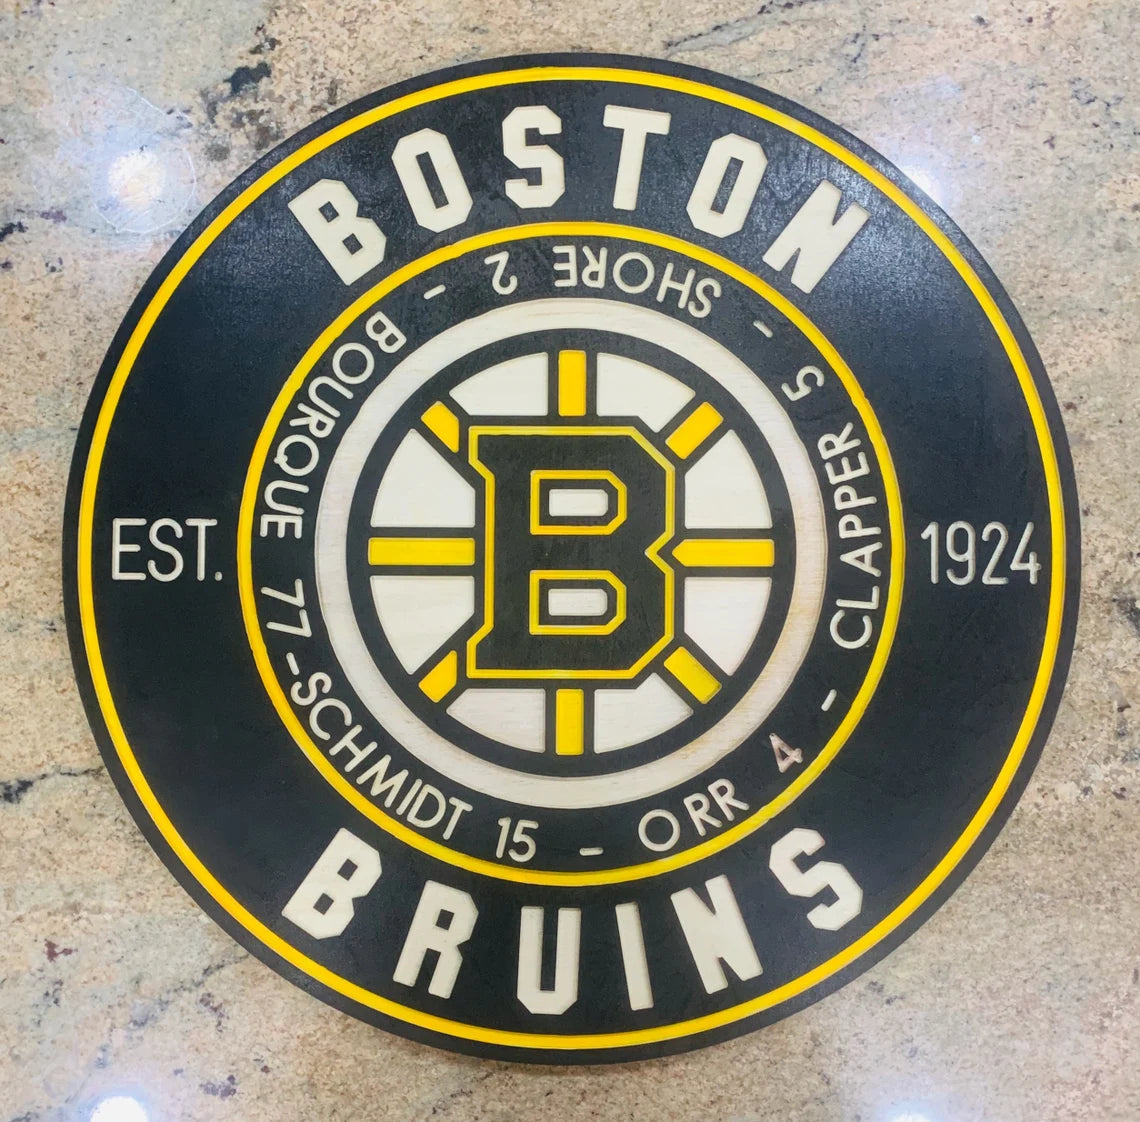 BOSTON HOCKEY Premium Wall Art Sign NHL All teams